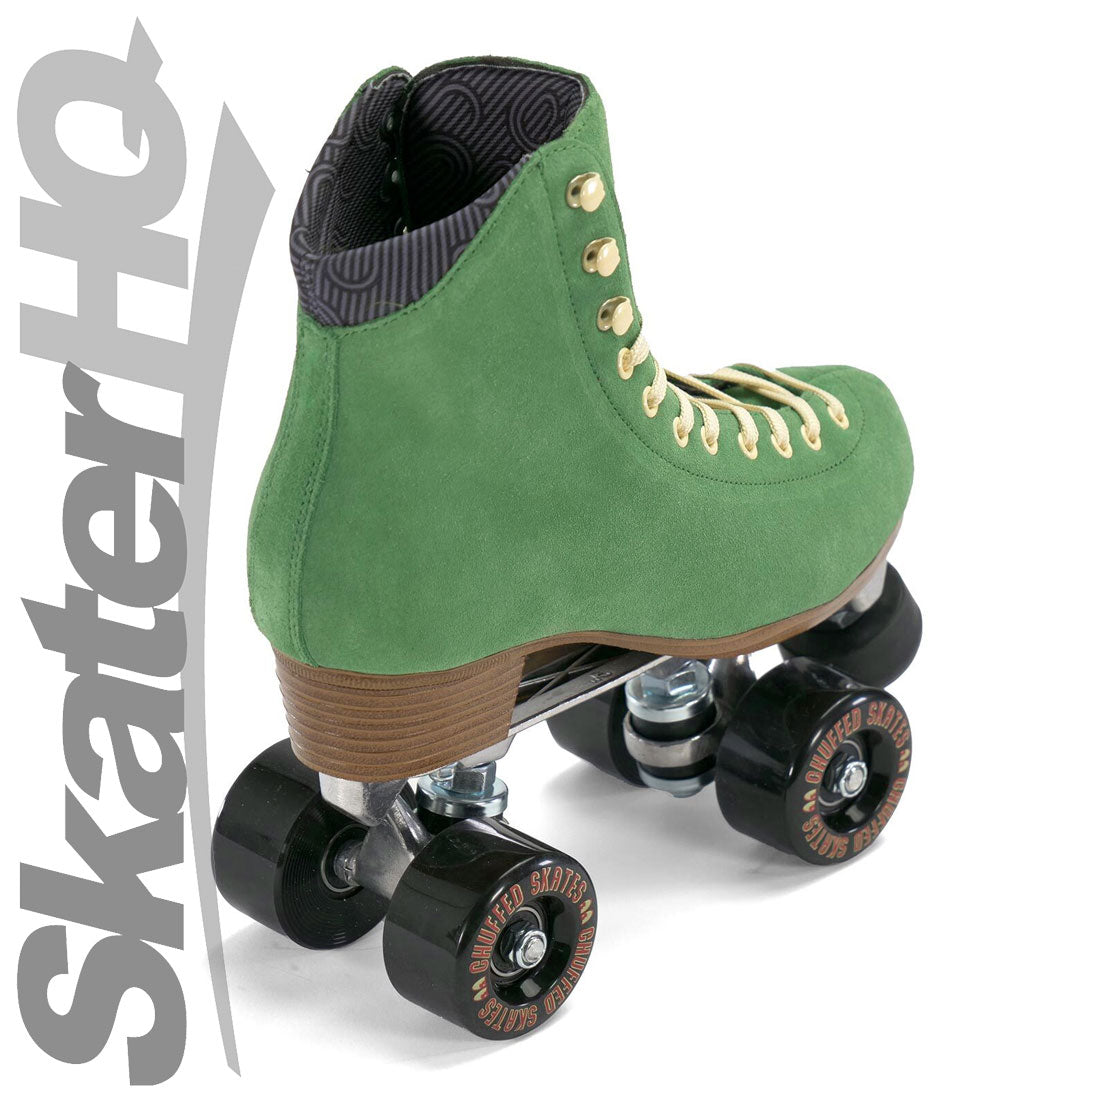 Chuffed Wanderer Olive Green 9US Roller Skates